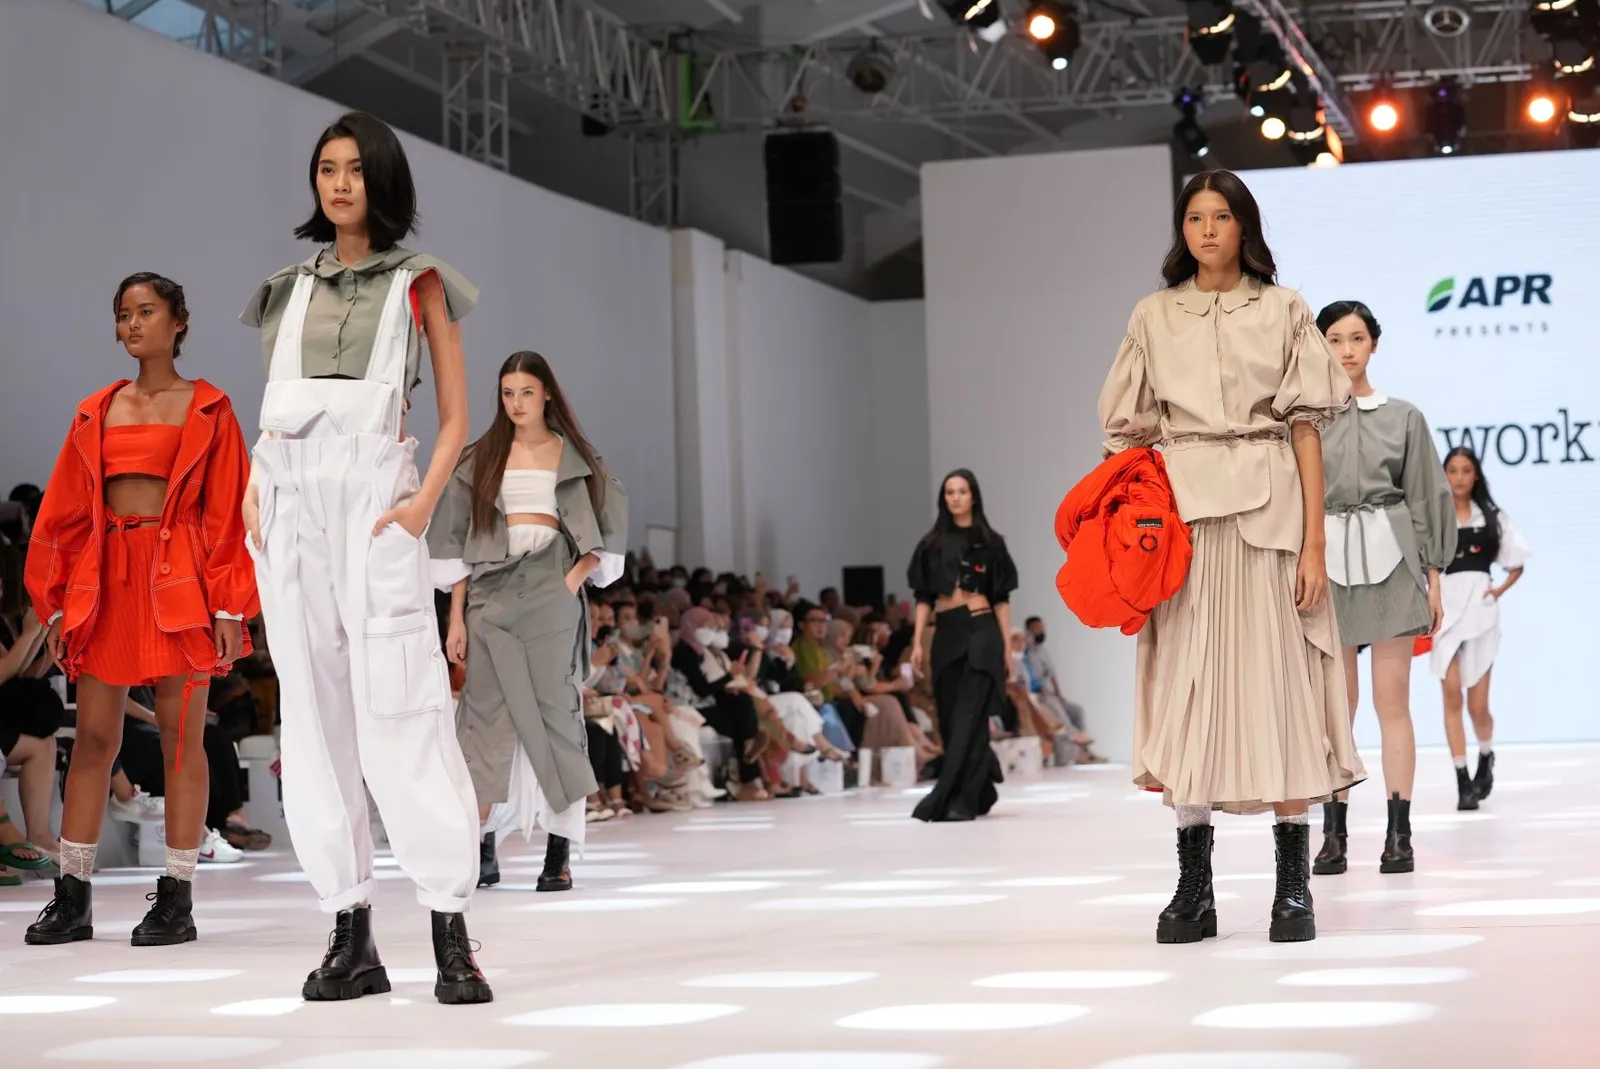 APR Libatkan 5 Brand Lokal untuk Misi Sustainable Fashion